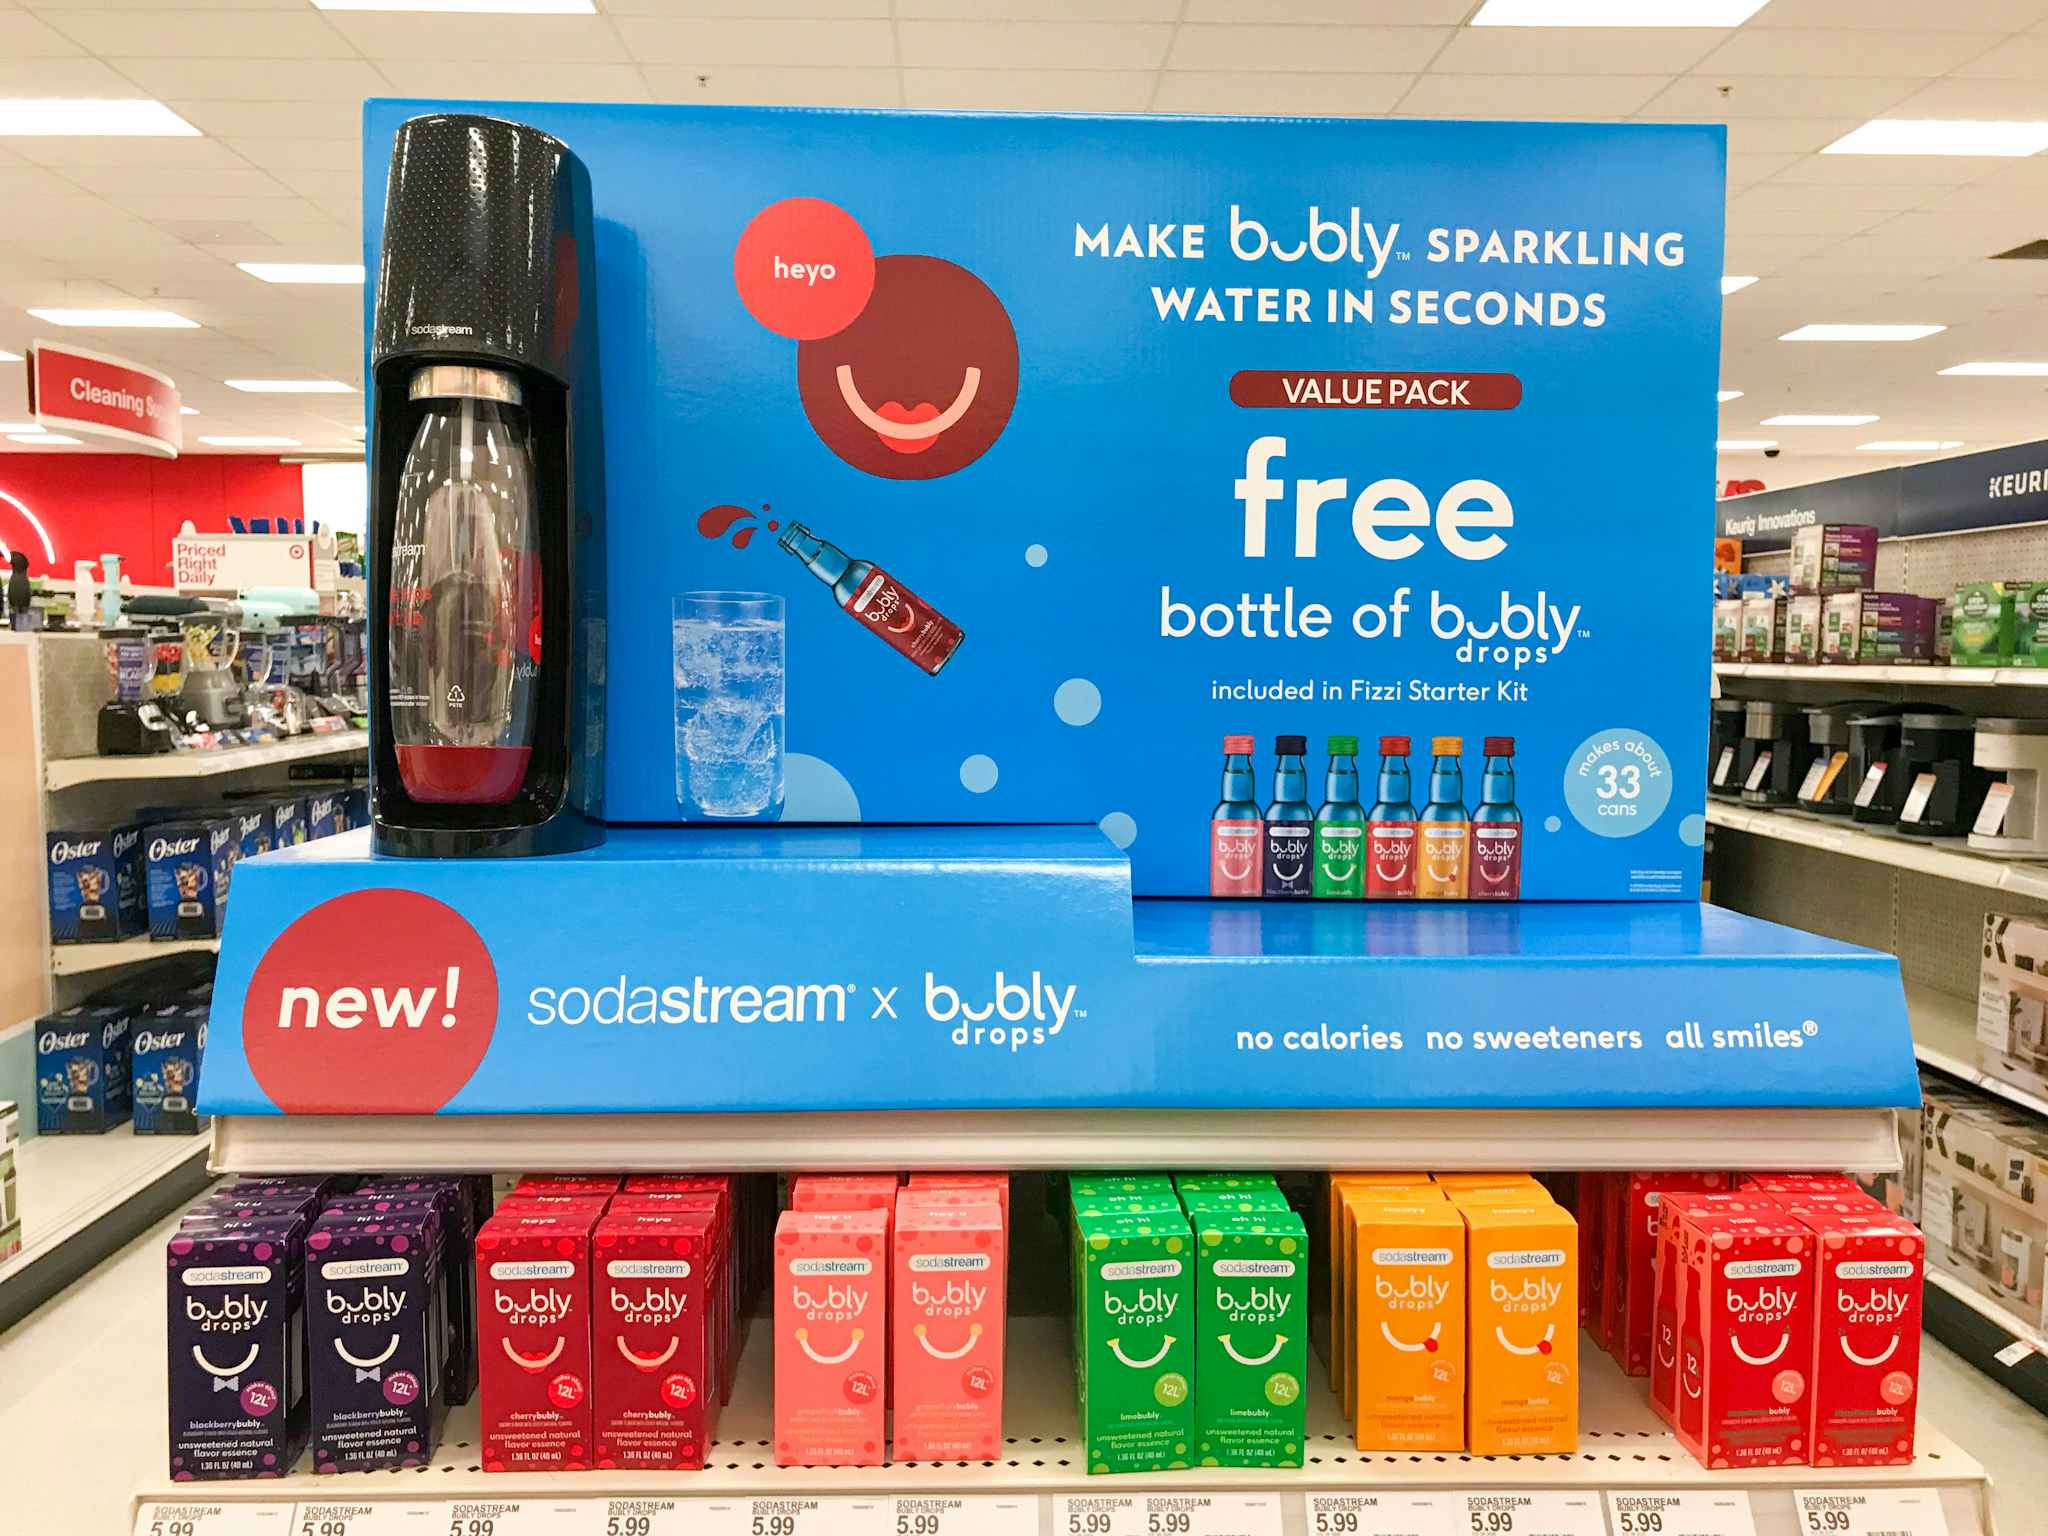 The Sodastream x Bubly Drops display at Target.